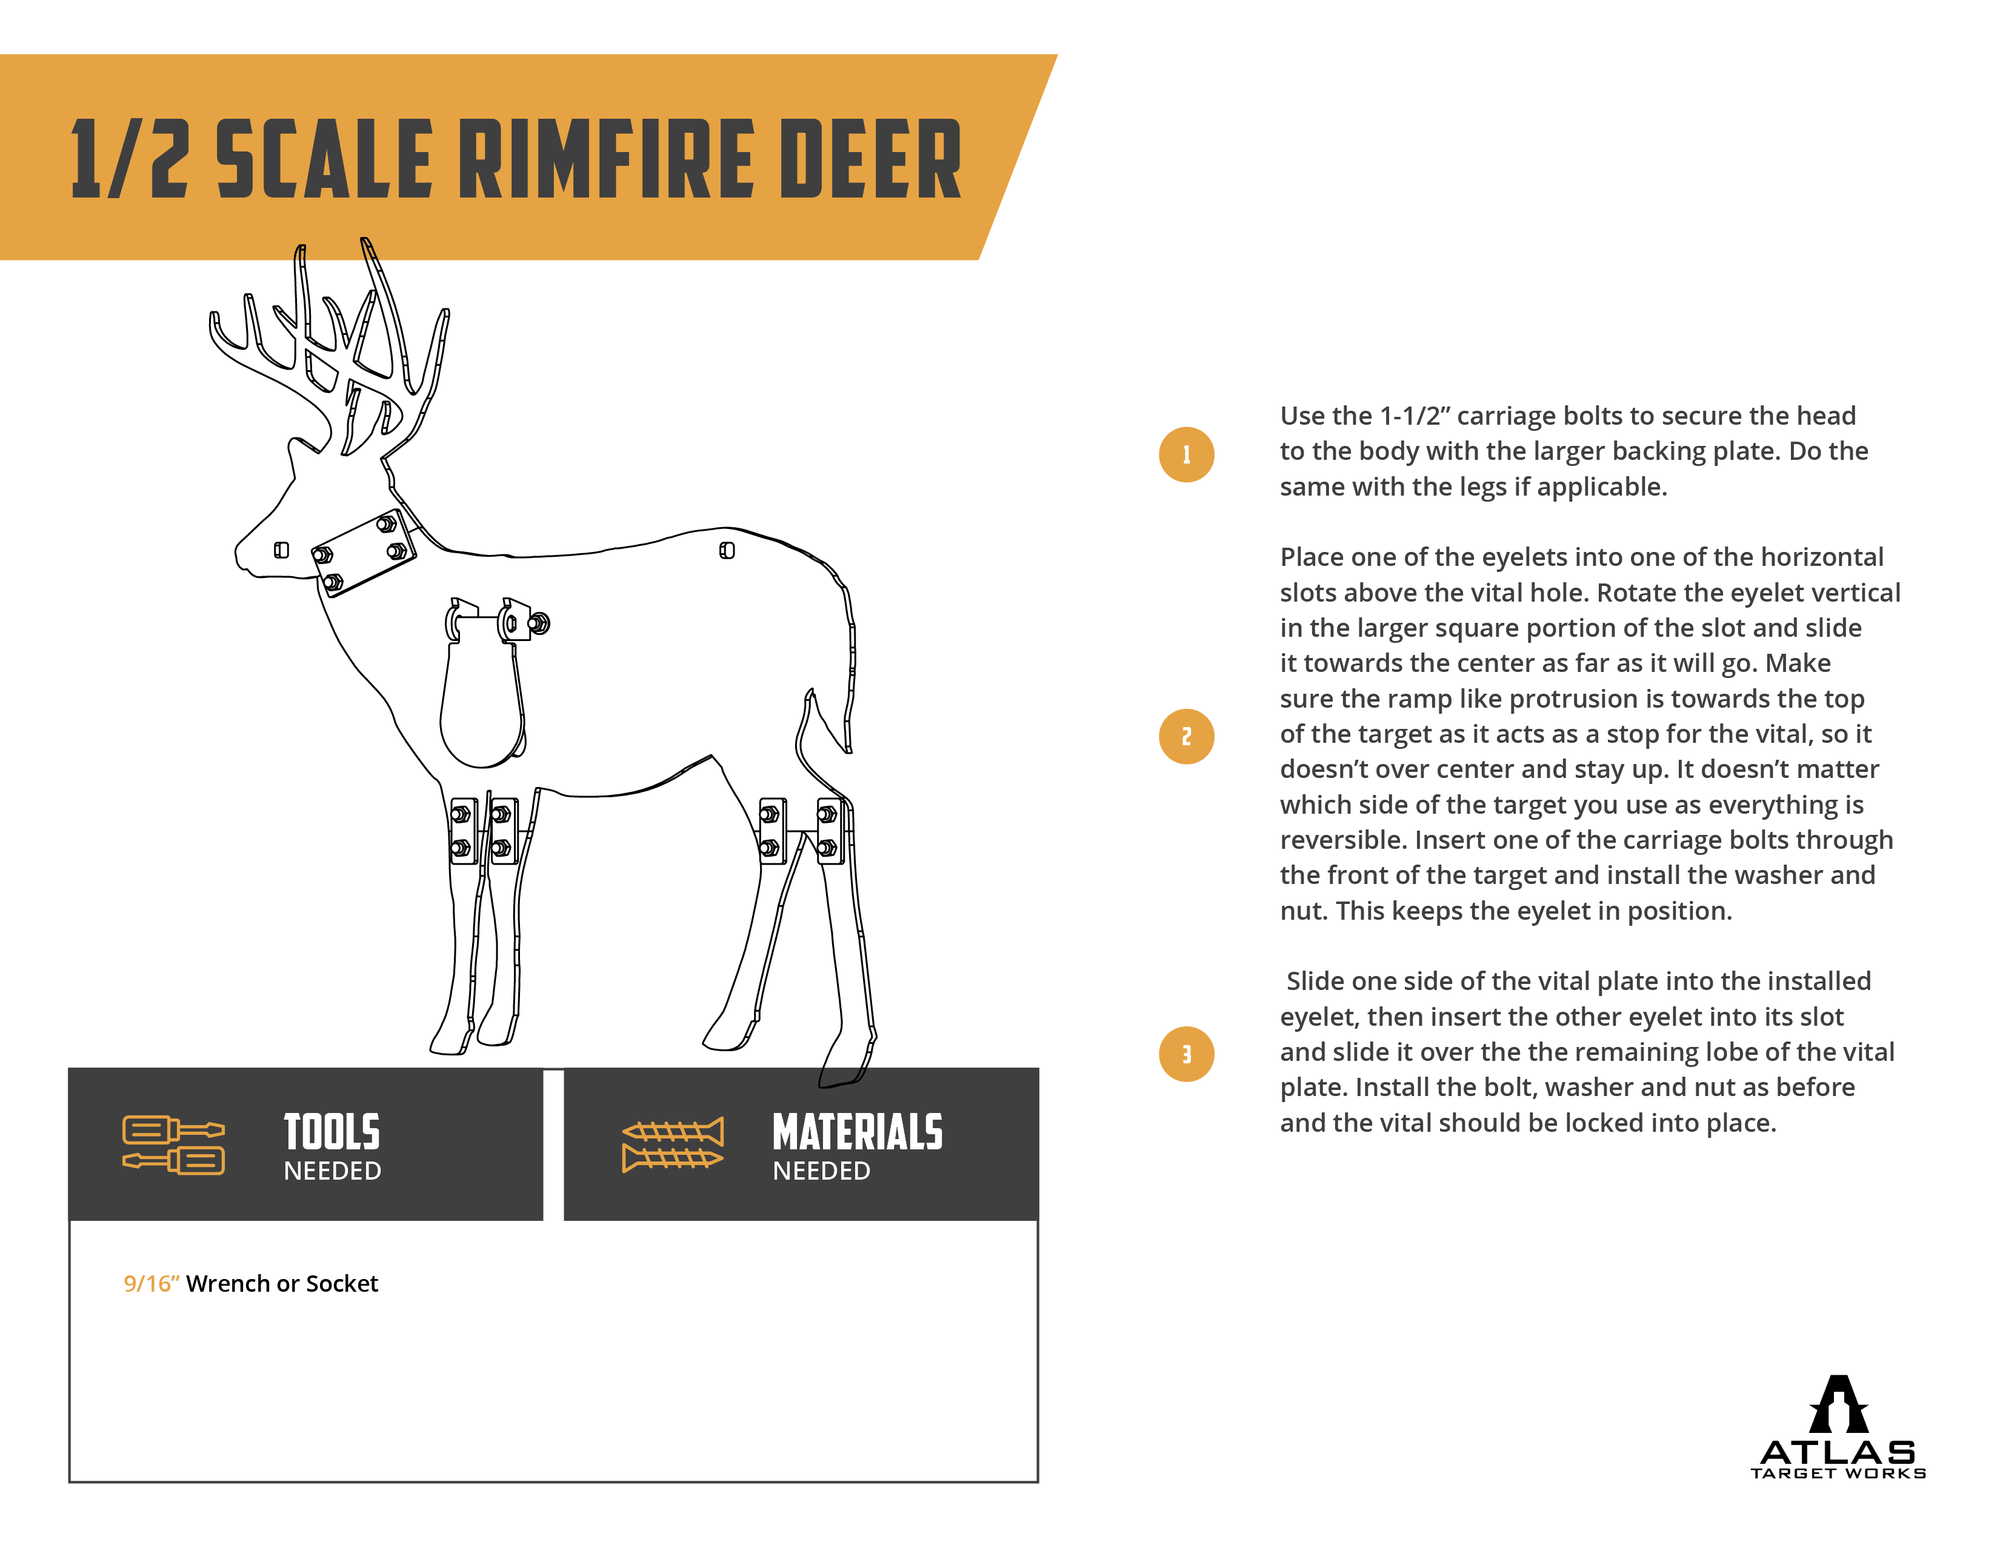 rimfire deer assembly instructions